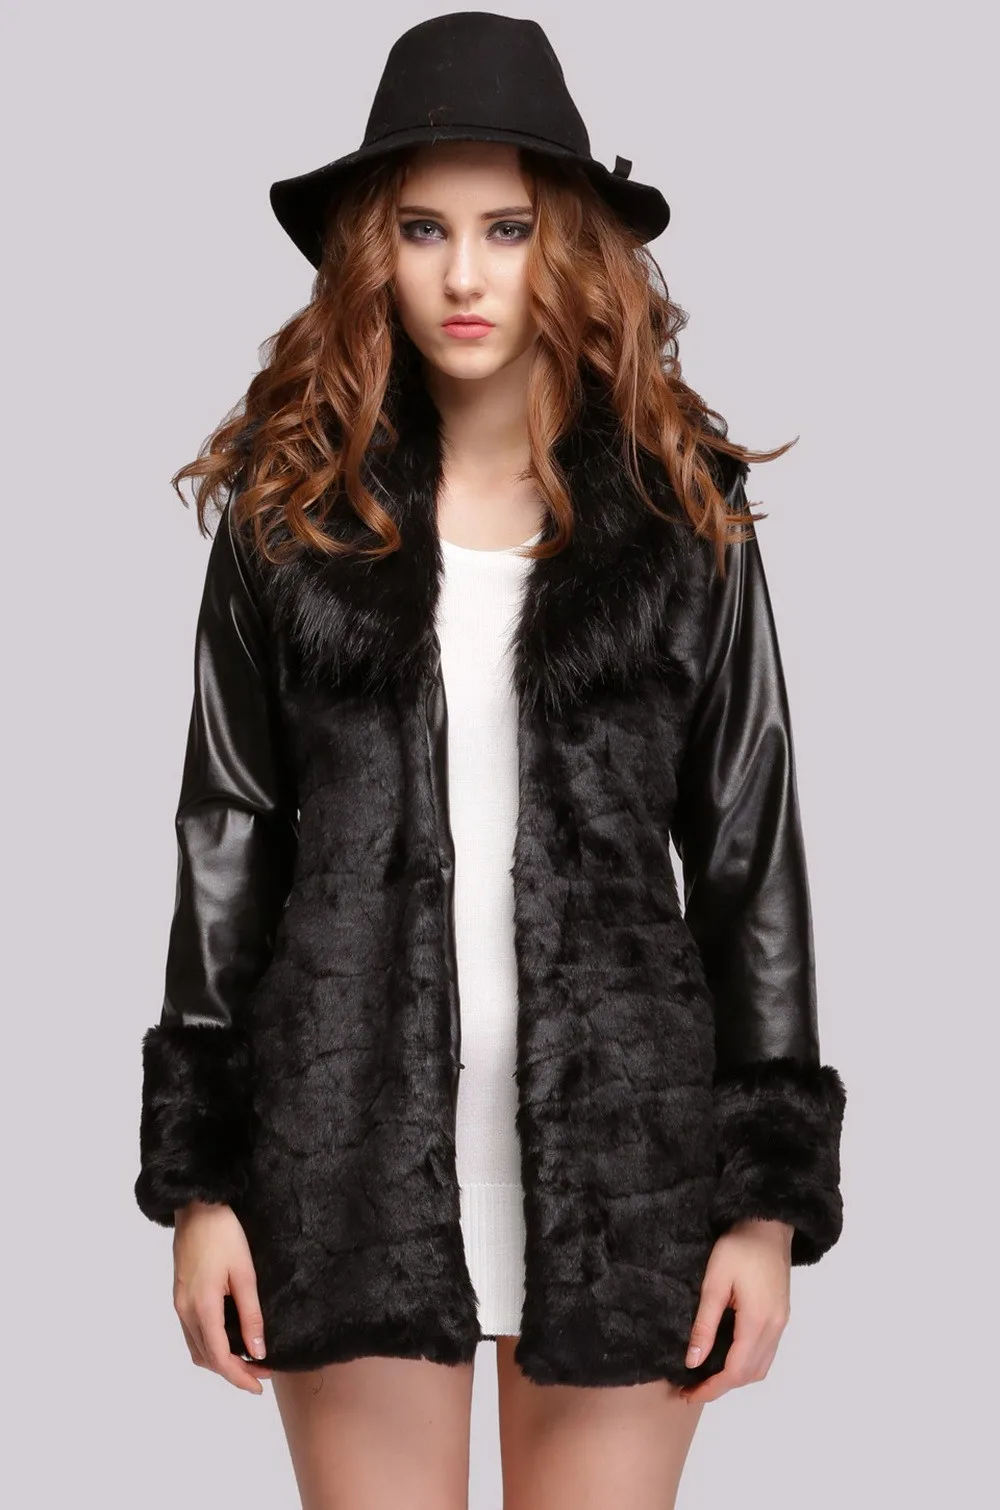 Fur Coats Buy Online - JacketIn